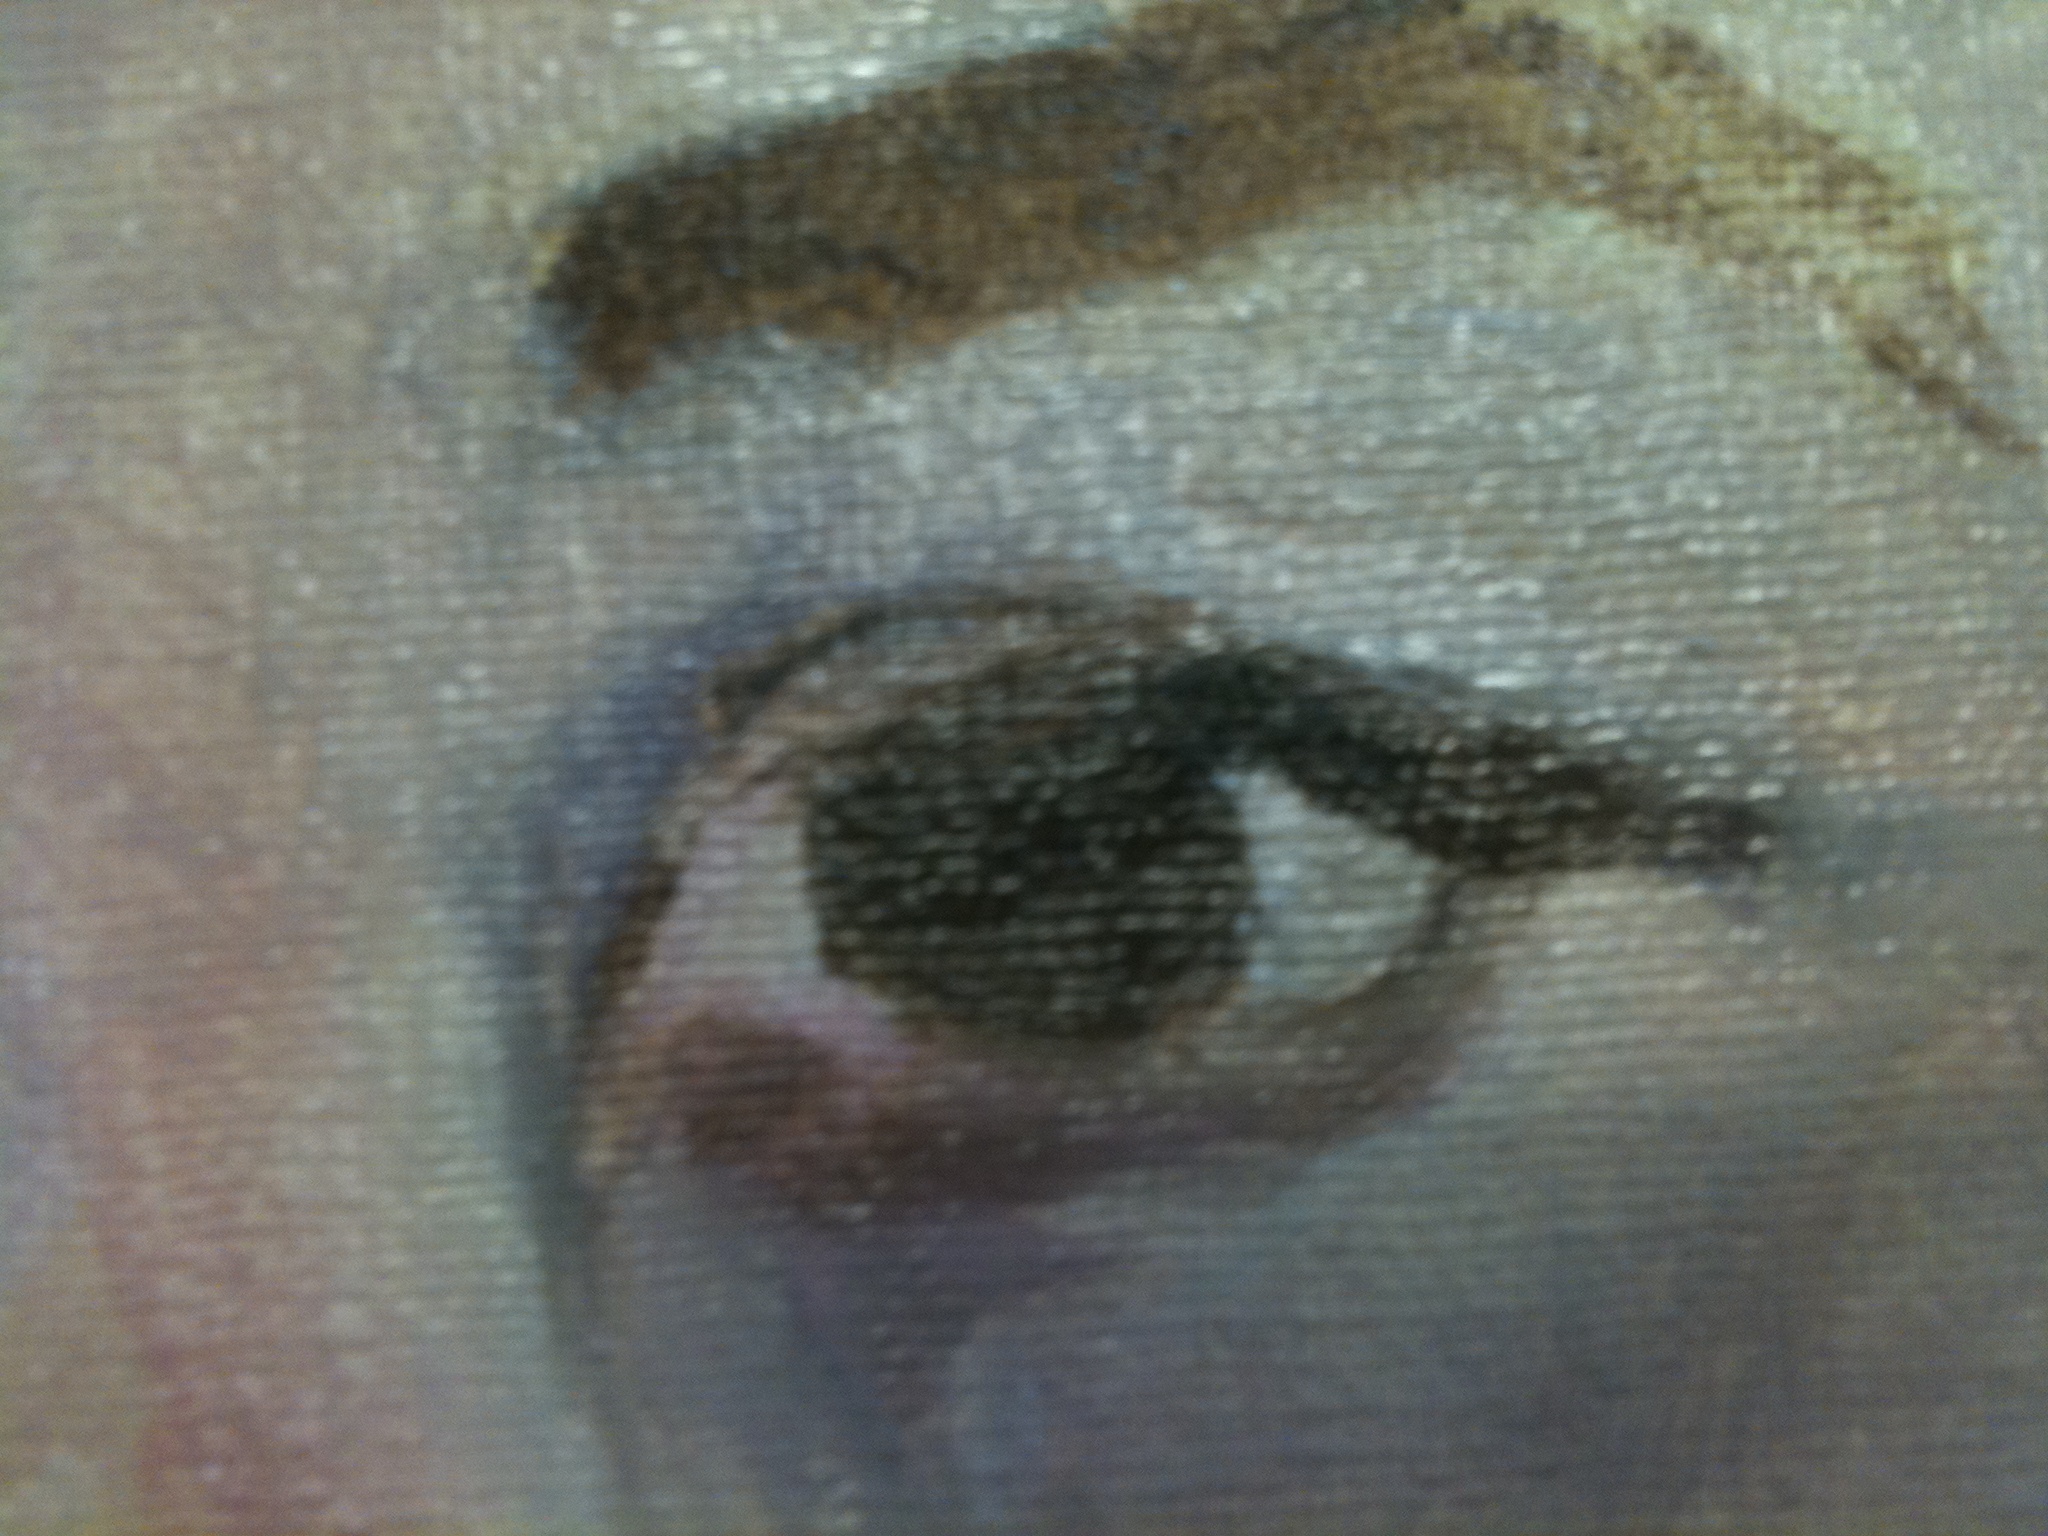 Left eye of self-portrait